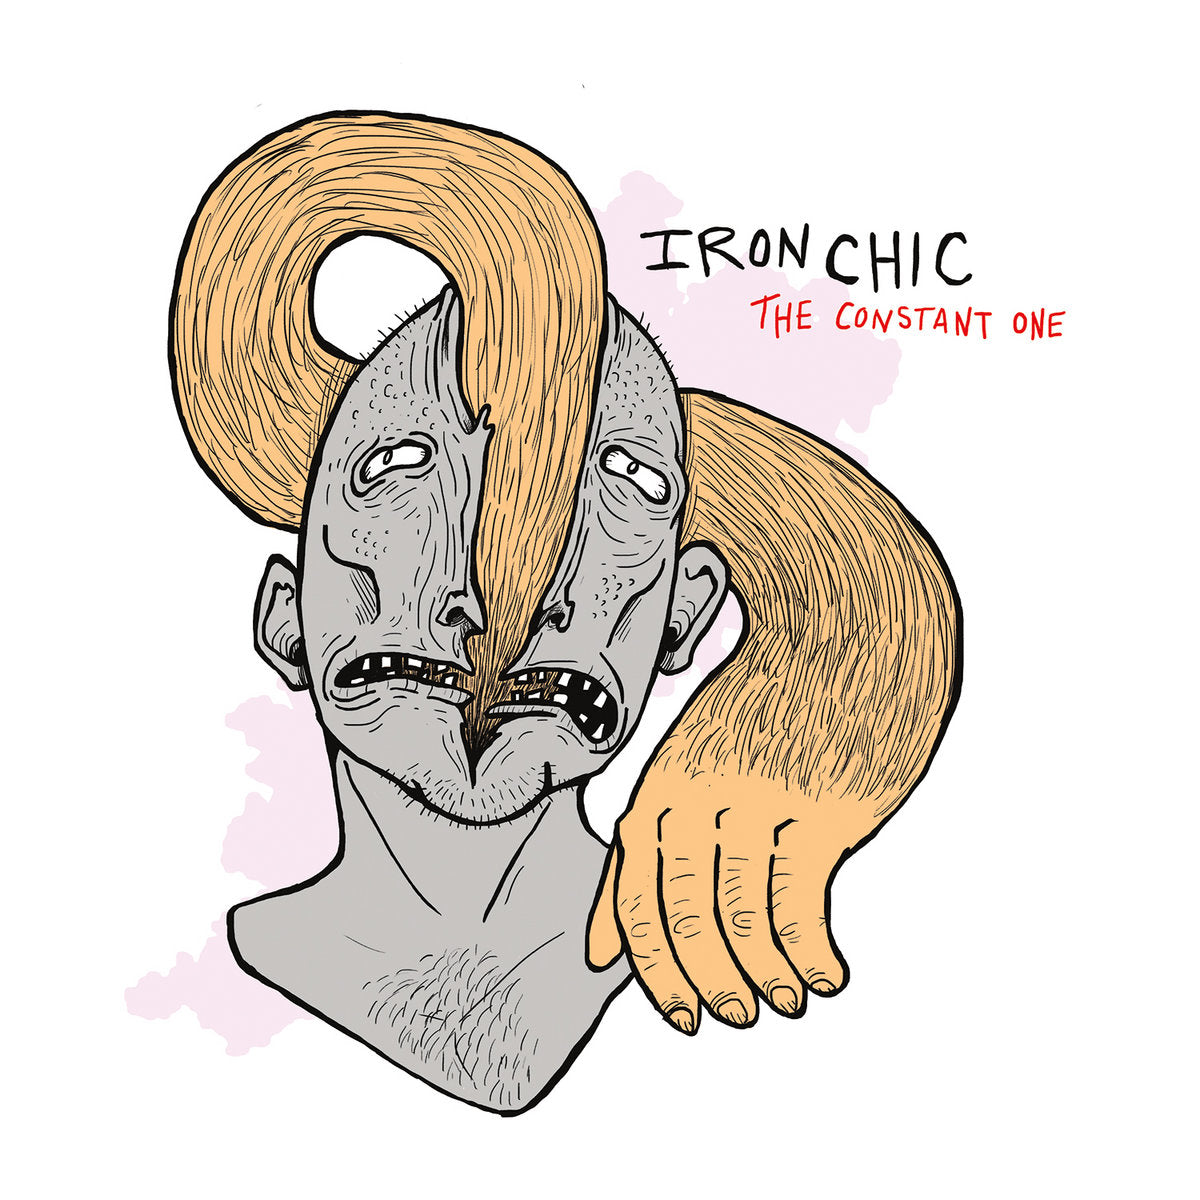 Iron Chic "The Constant One" 12" Vinyl